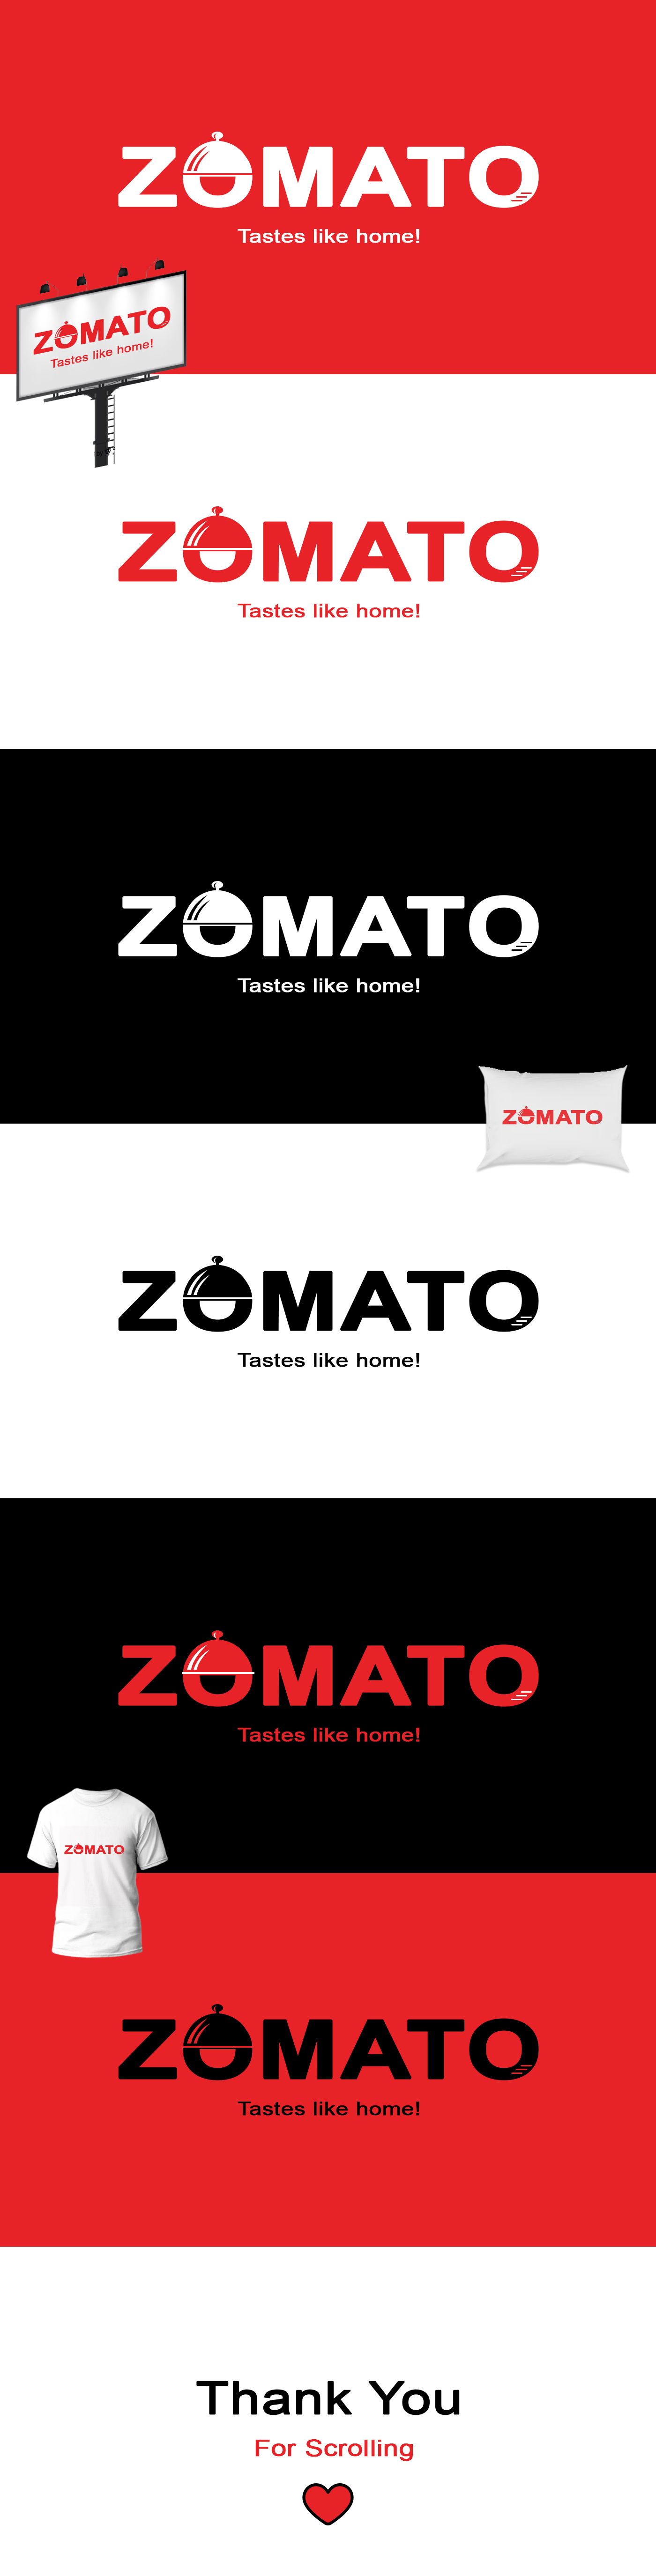 Zomato Logo PNG Vectors Free Download